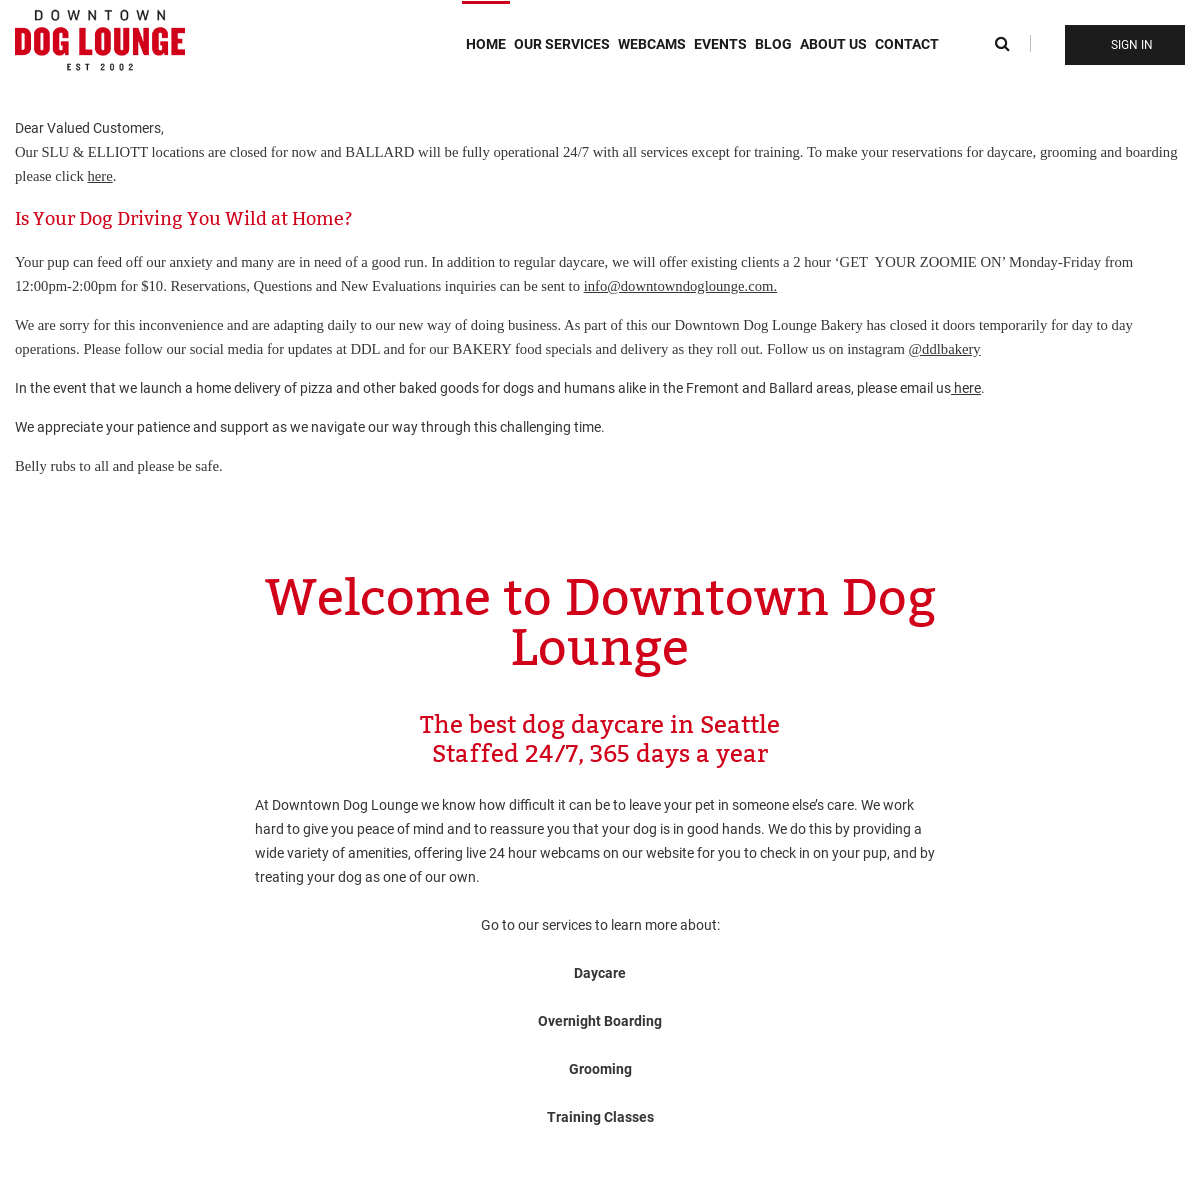 A complete backup of downtowndoglounge.com